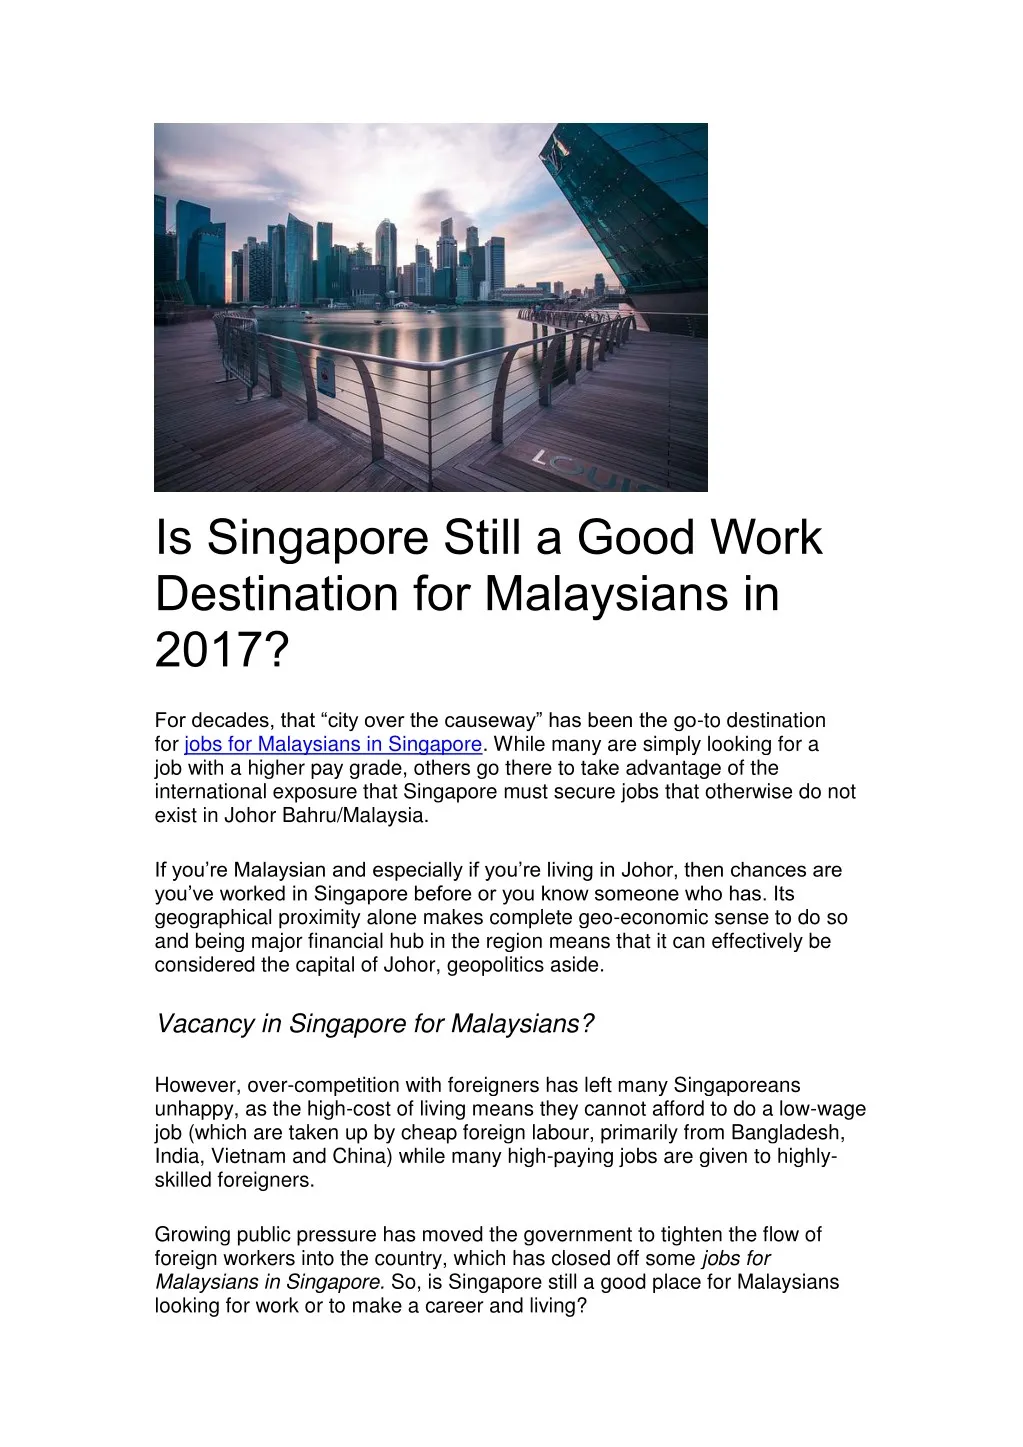 is singapore still a good work destination